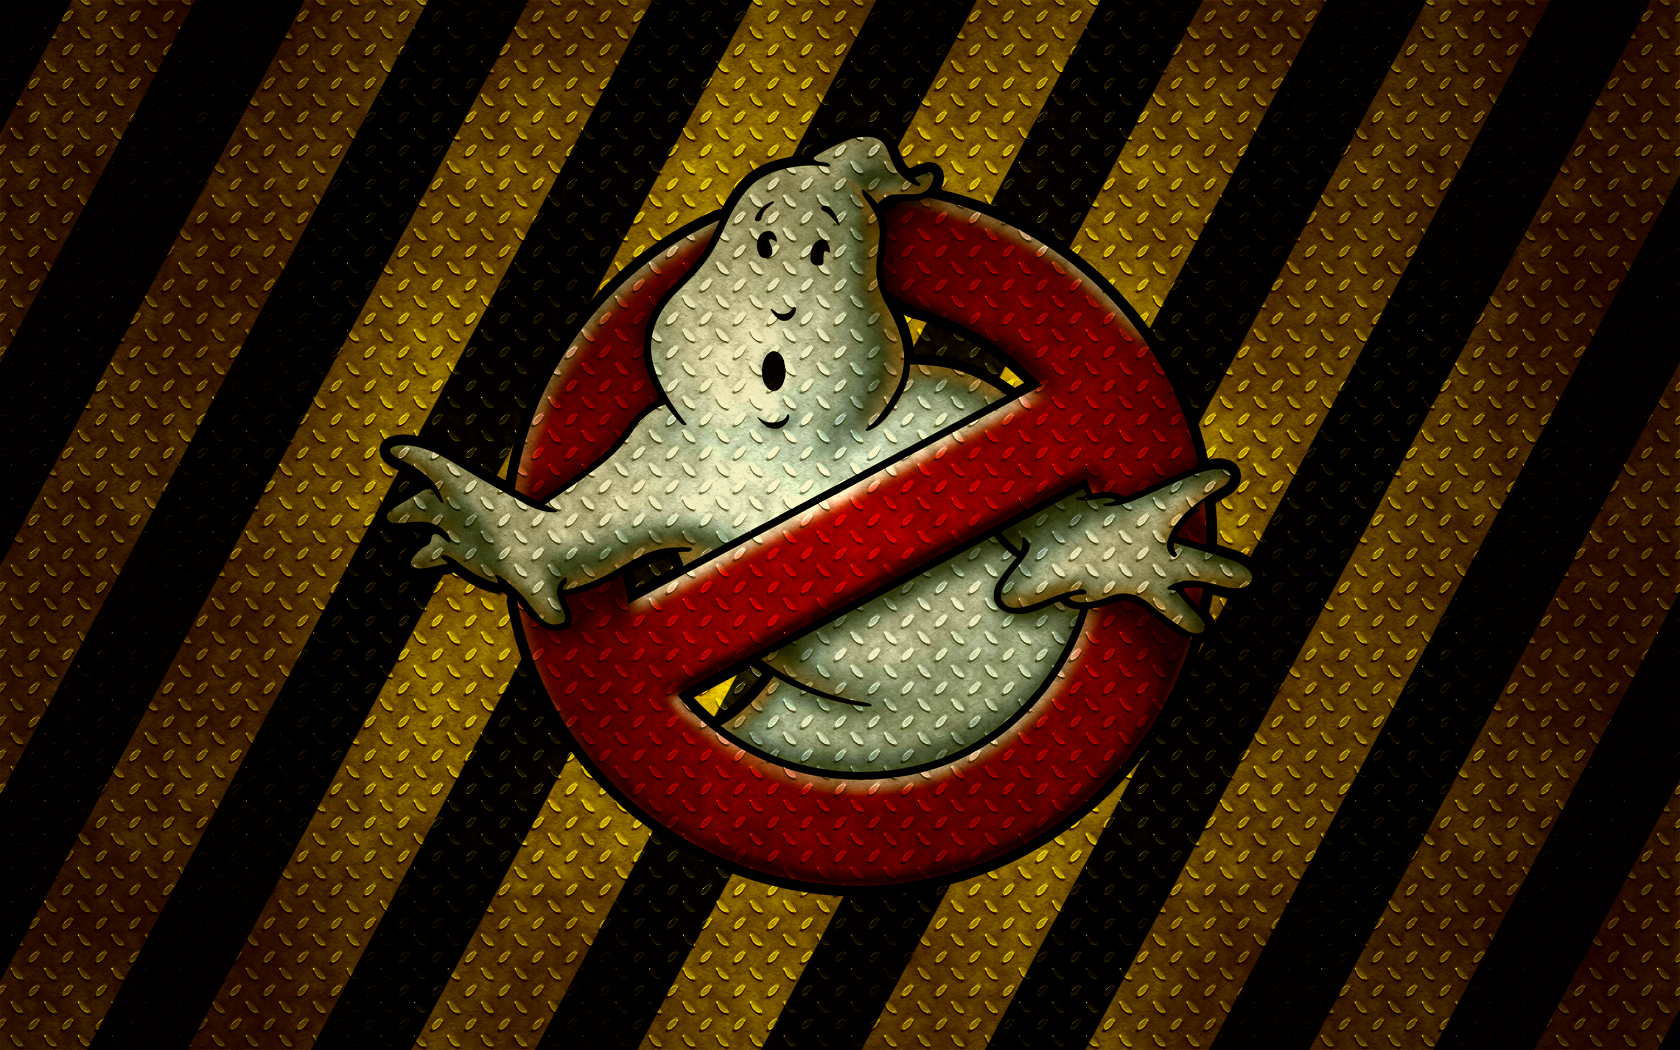 Ghostbusters Wallpaper Dark by MartynTranter on DeviantArt